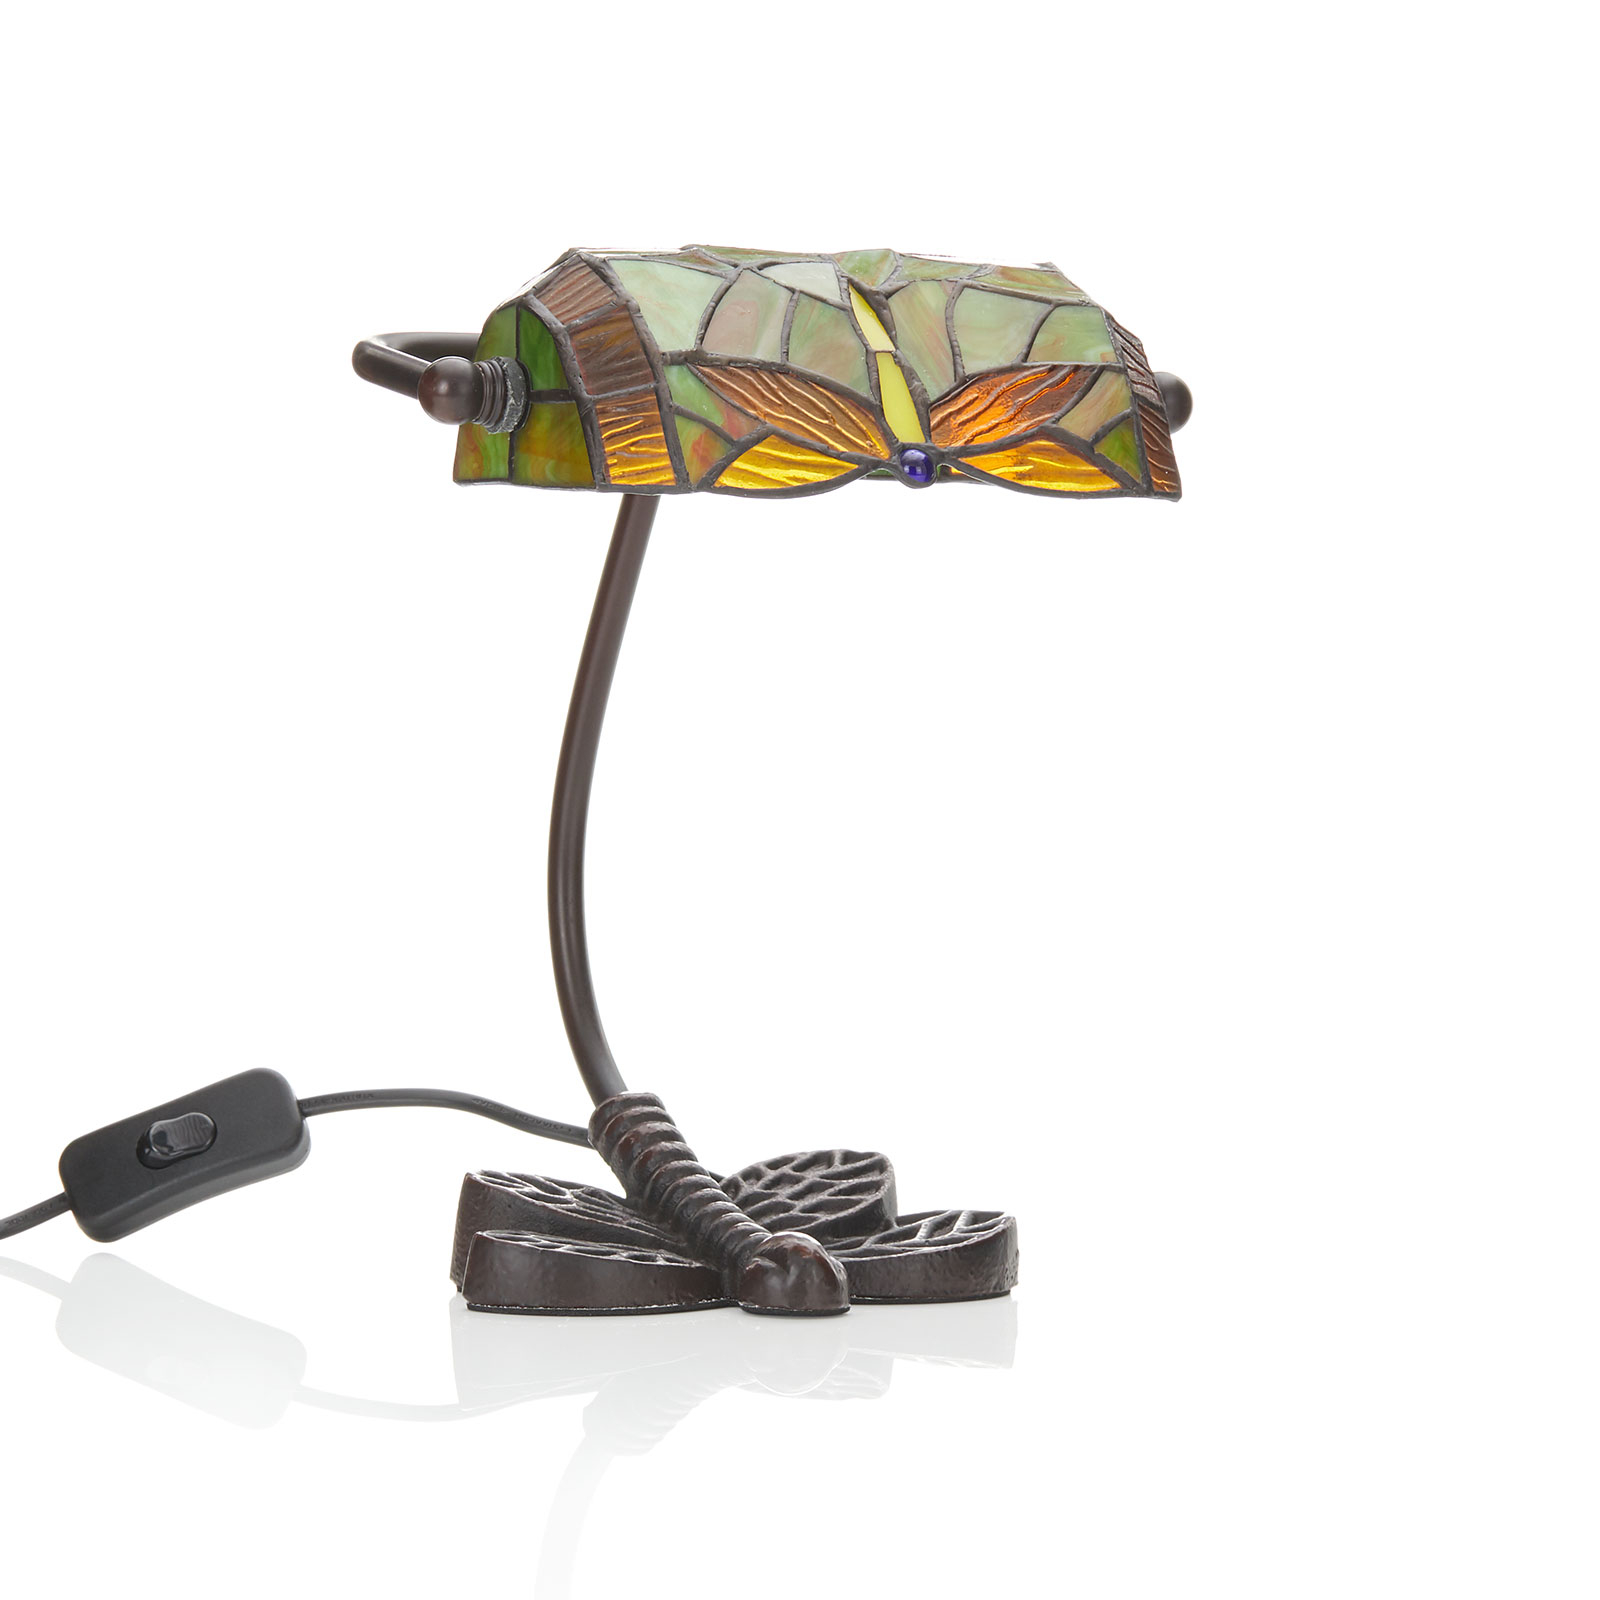 Fabulous table lamp DRAGONFLY, handmade